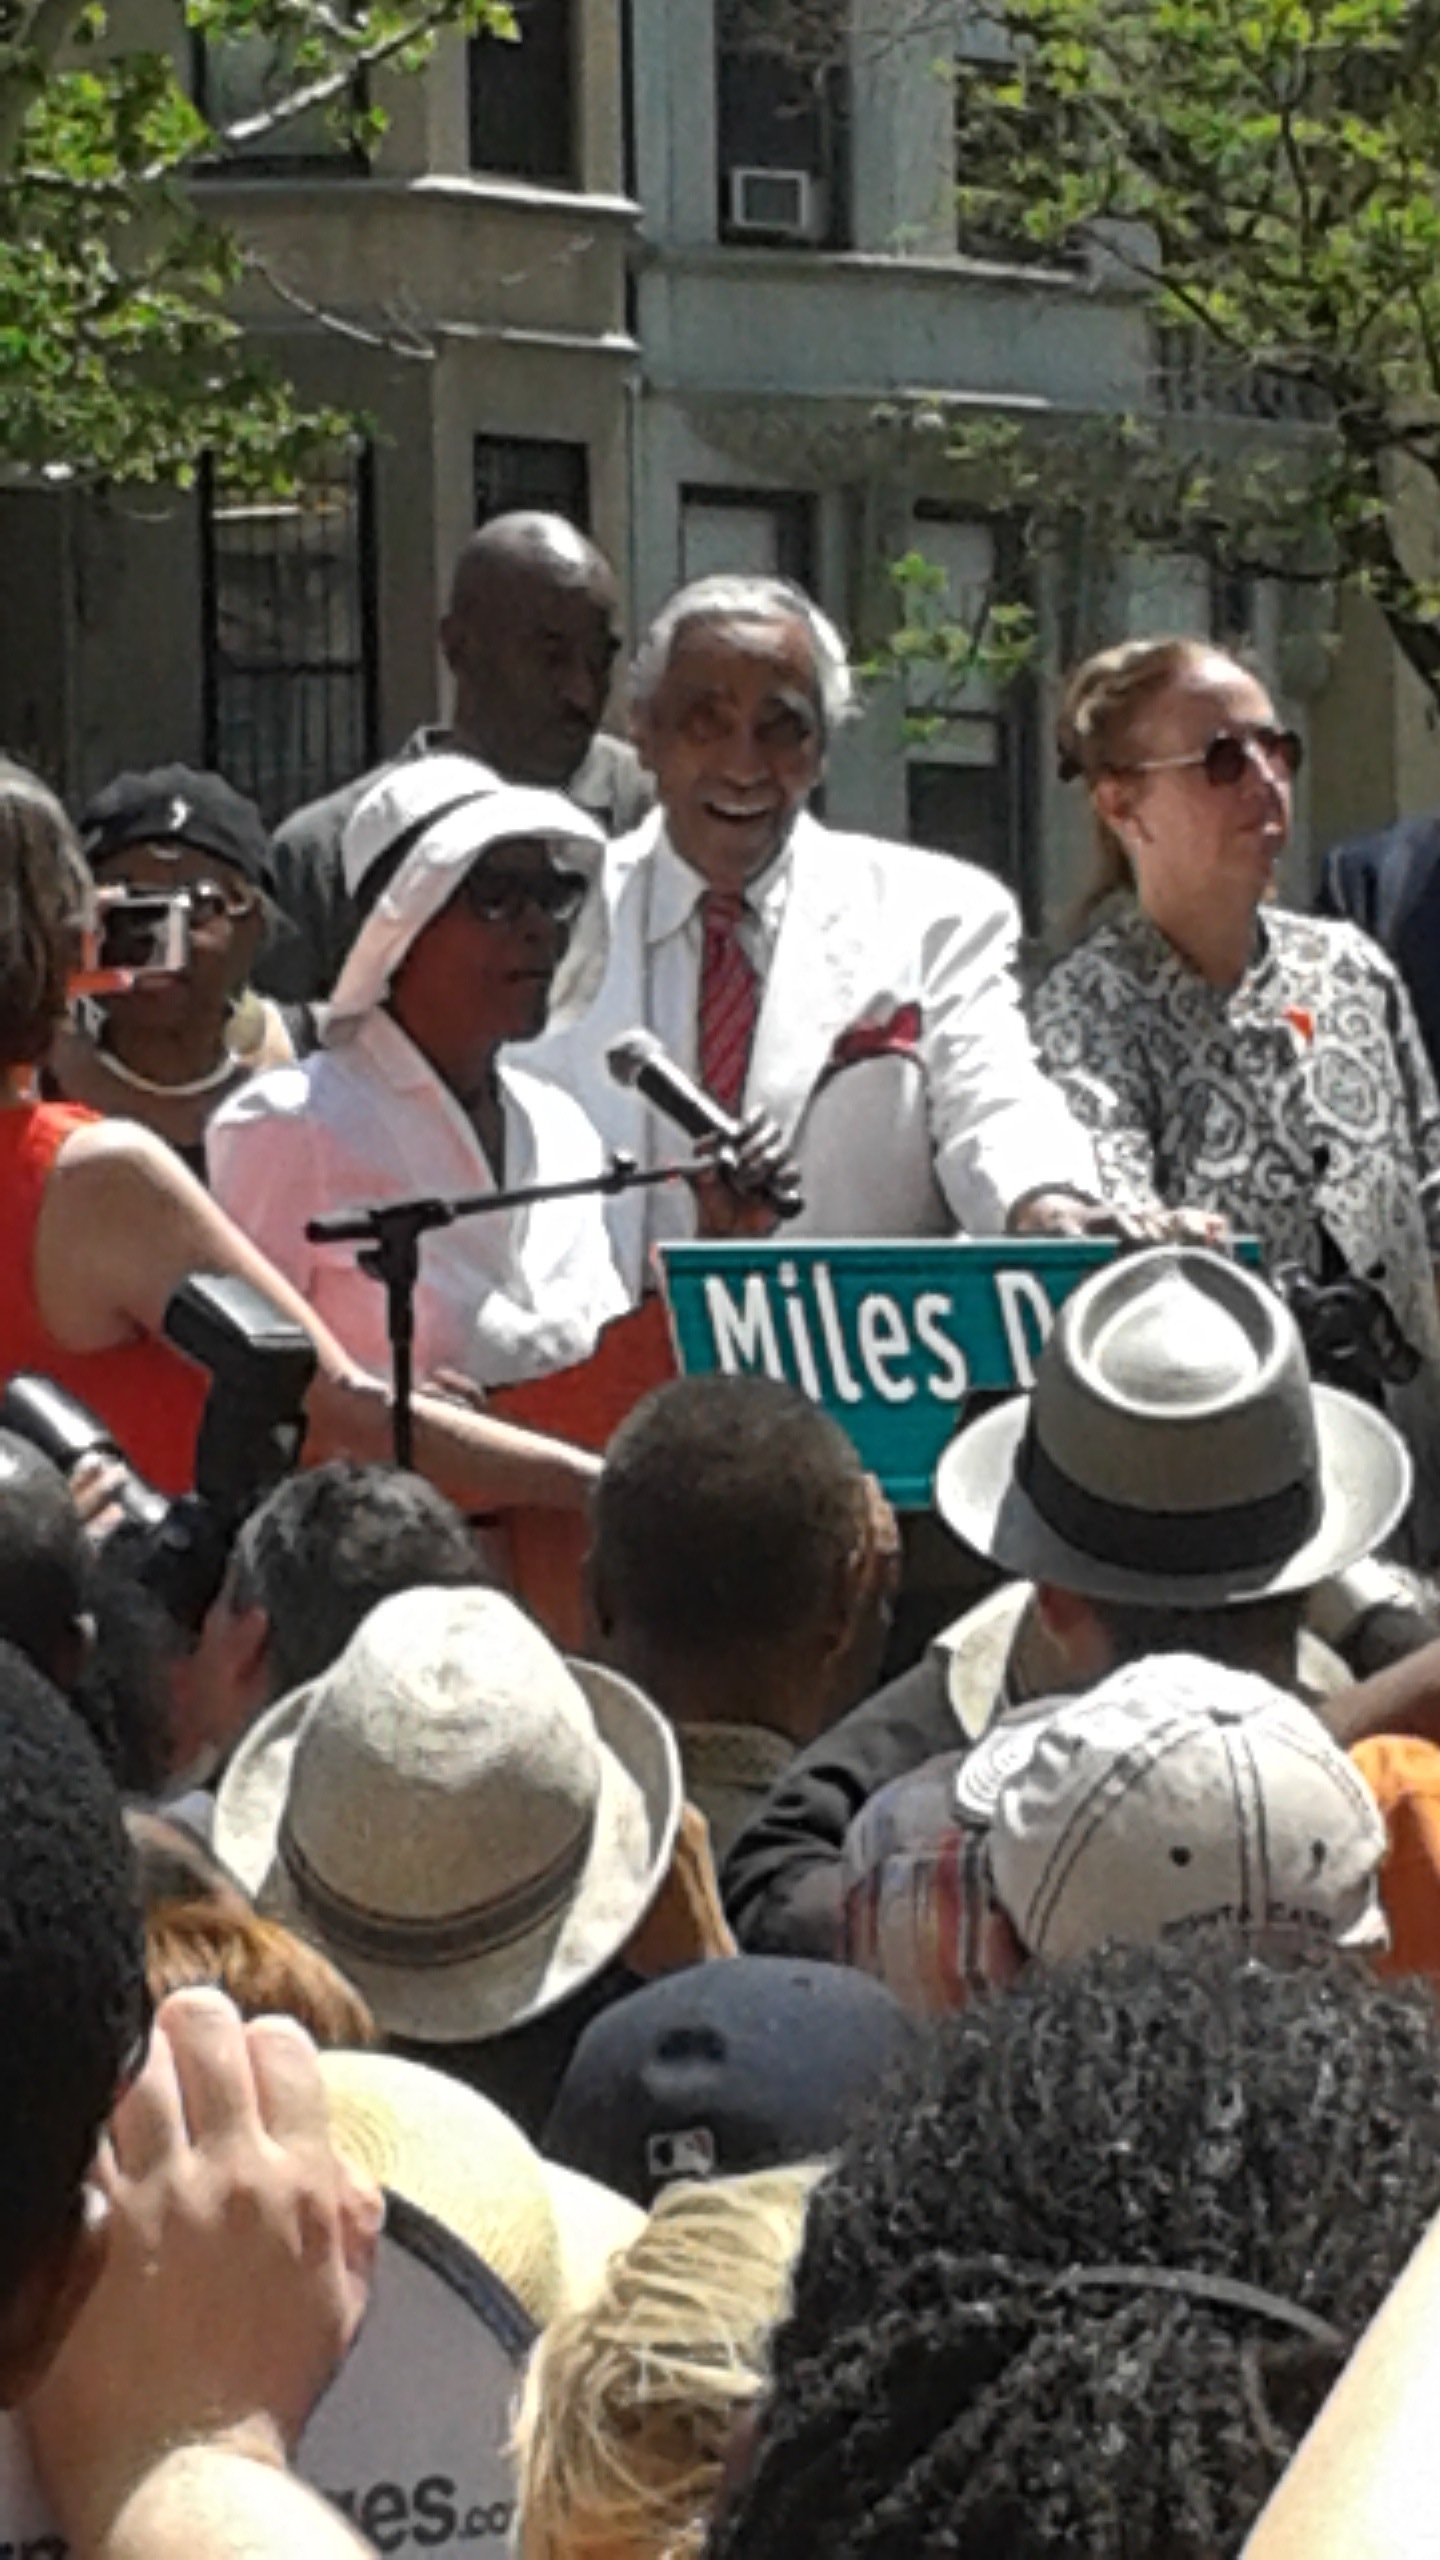 Congressman Charlie Rangel and Ms. Cicely Tyson at the Miles Davis Way Dedication Ceremony.